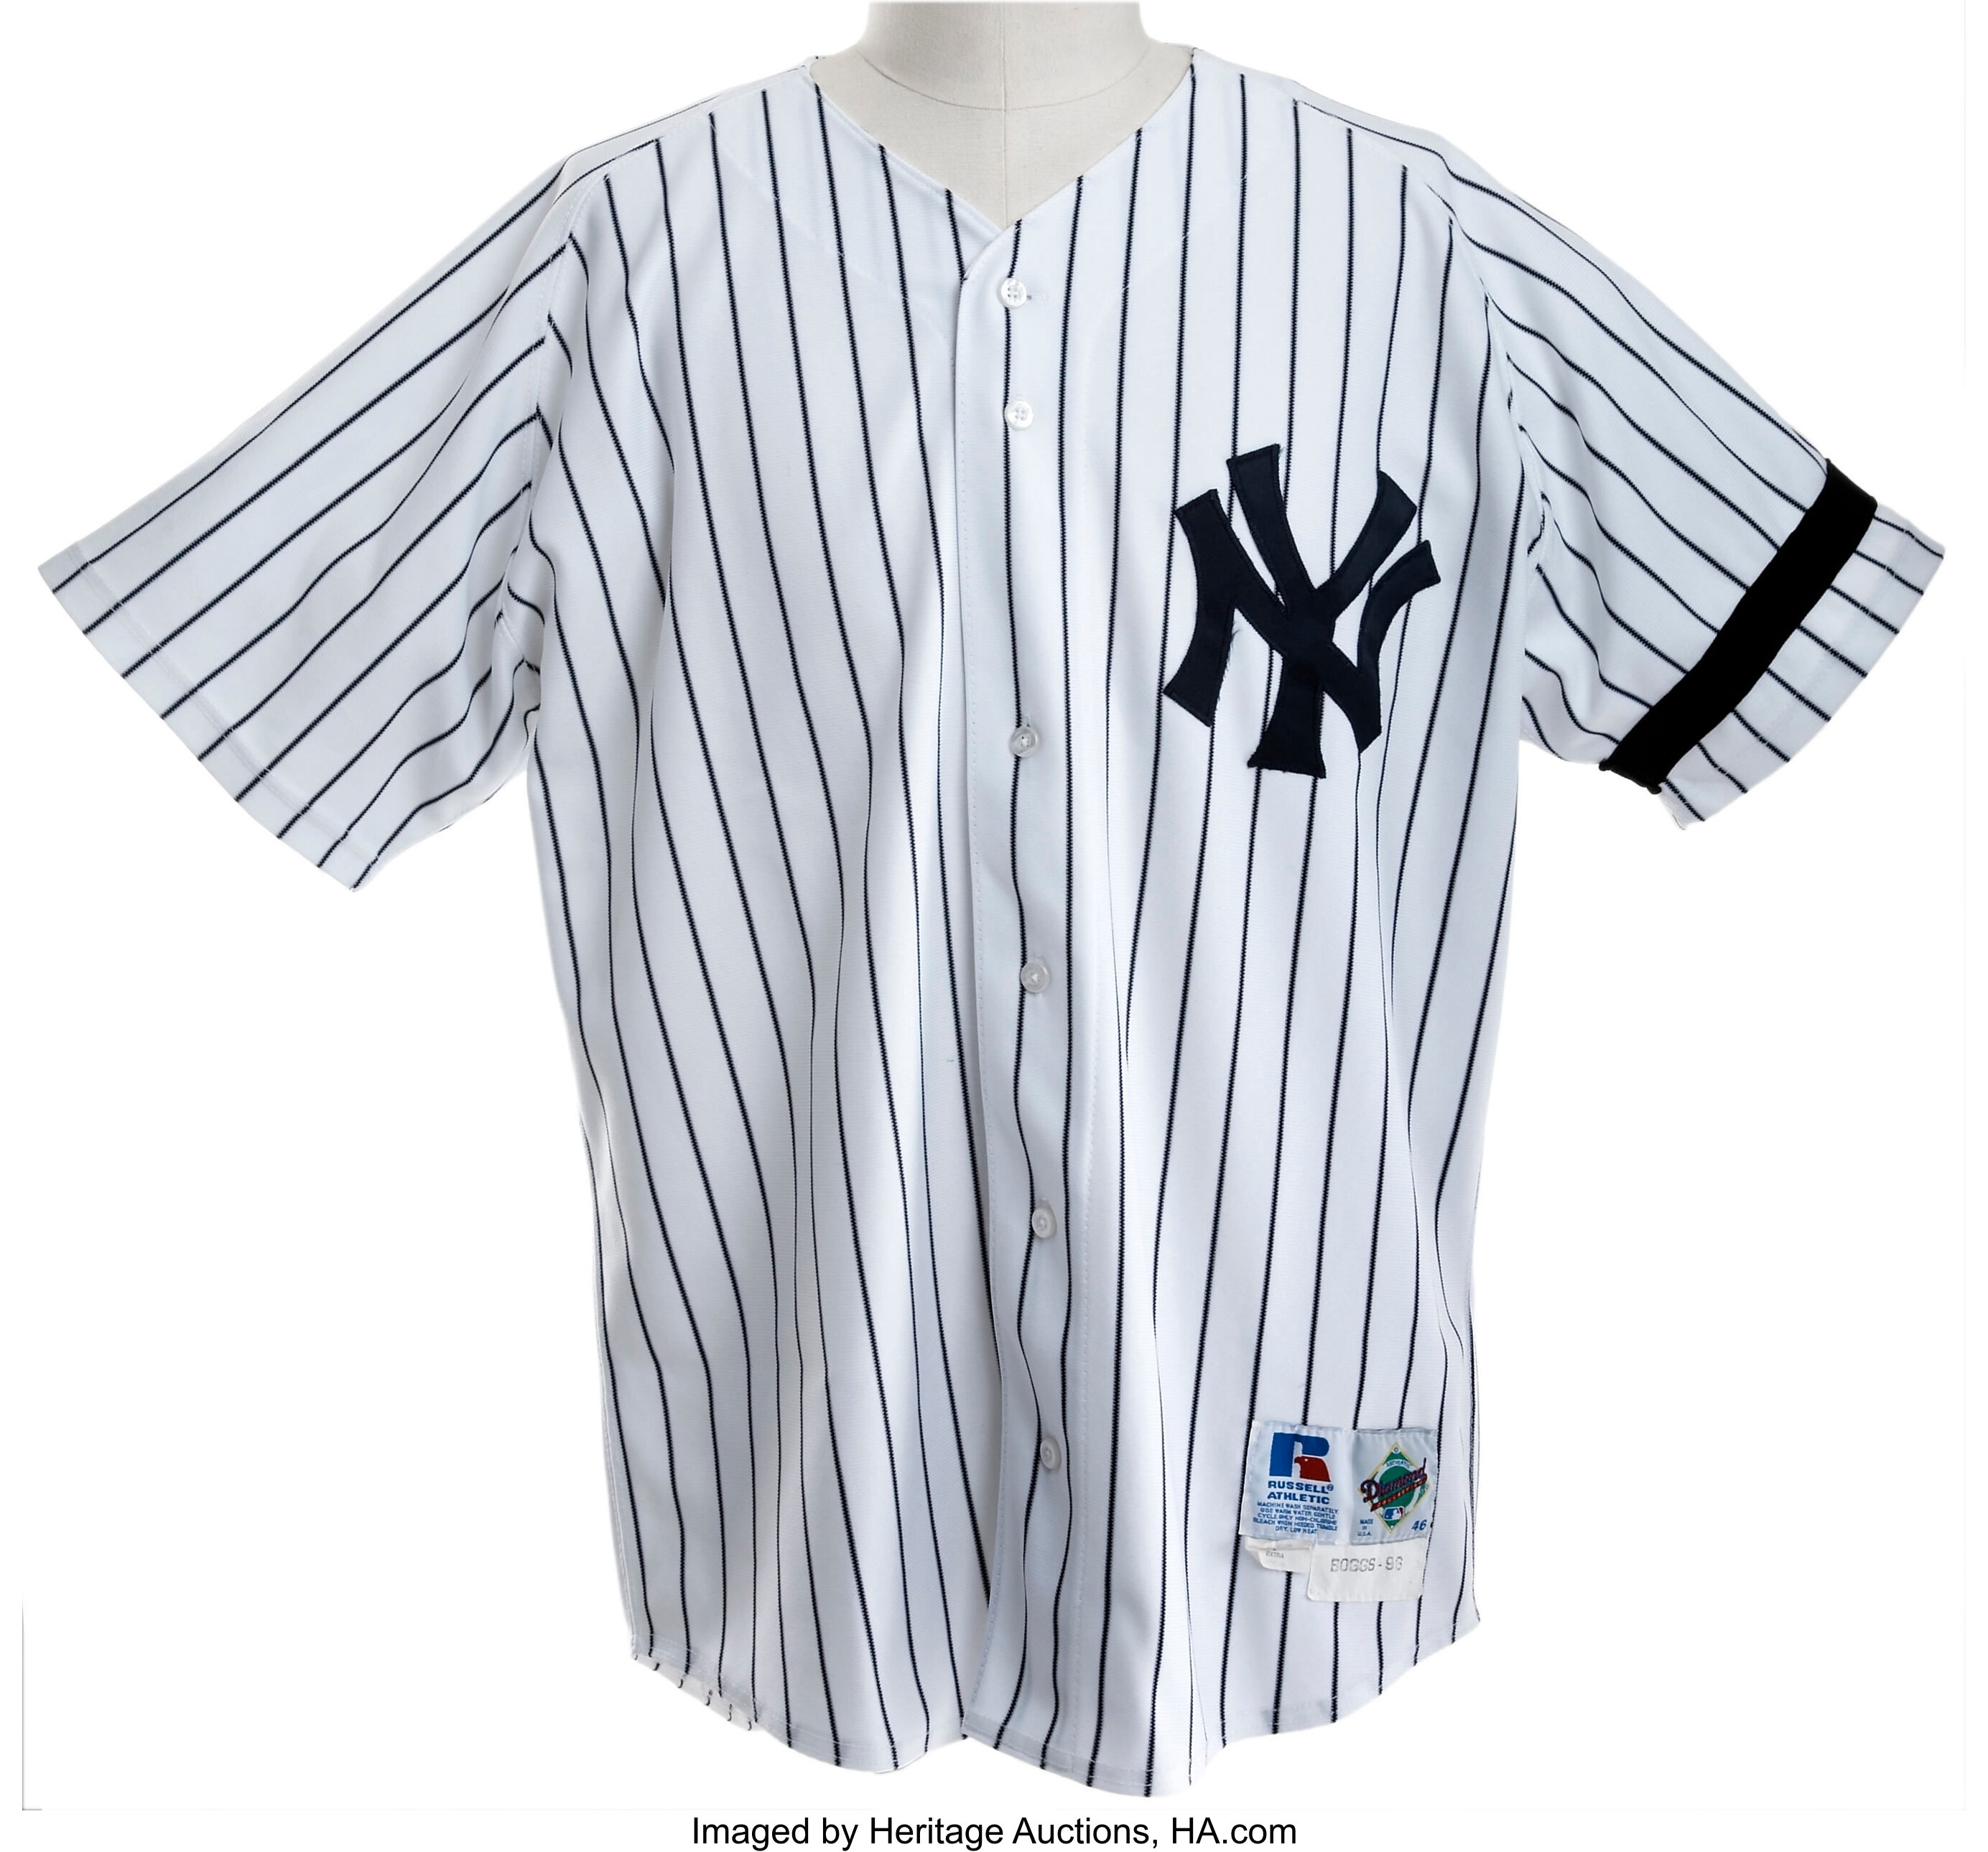 Wade Boggs 1996 New York Yankees Jersey – Best Sports Jerseys